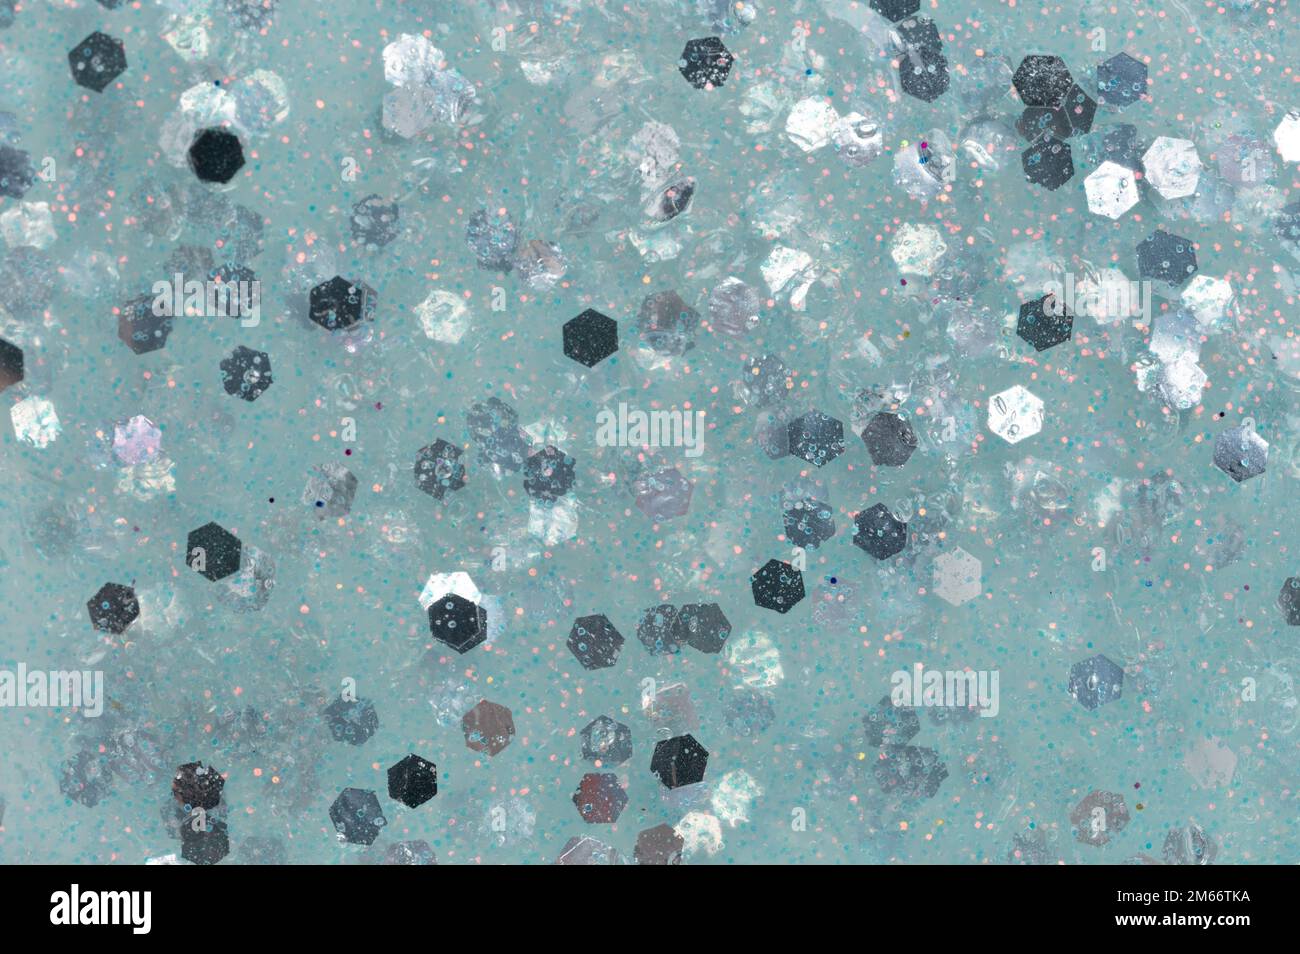 Light blue color sparkle slime texture background close up view Stock Photo